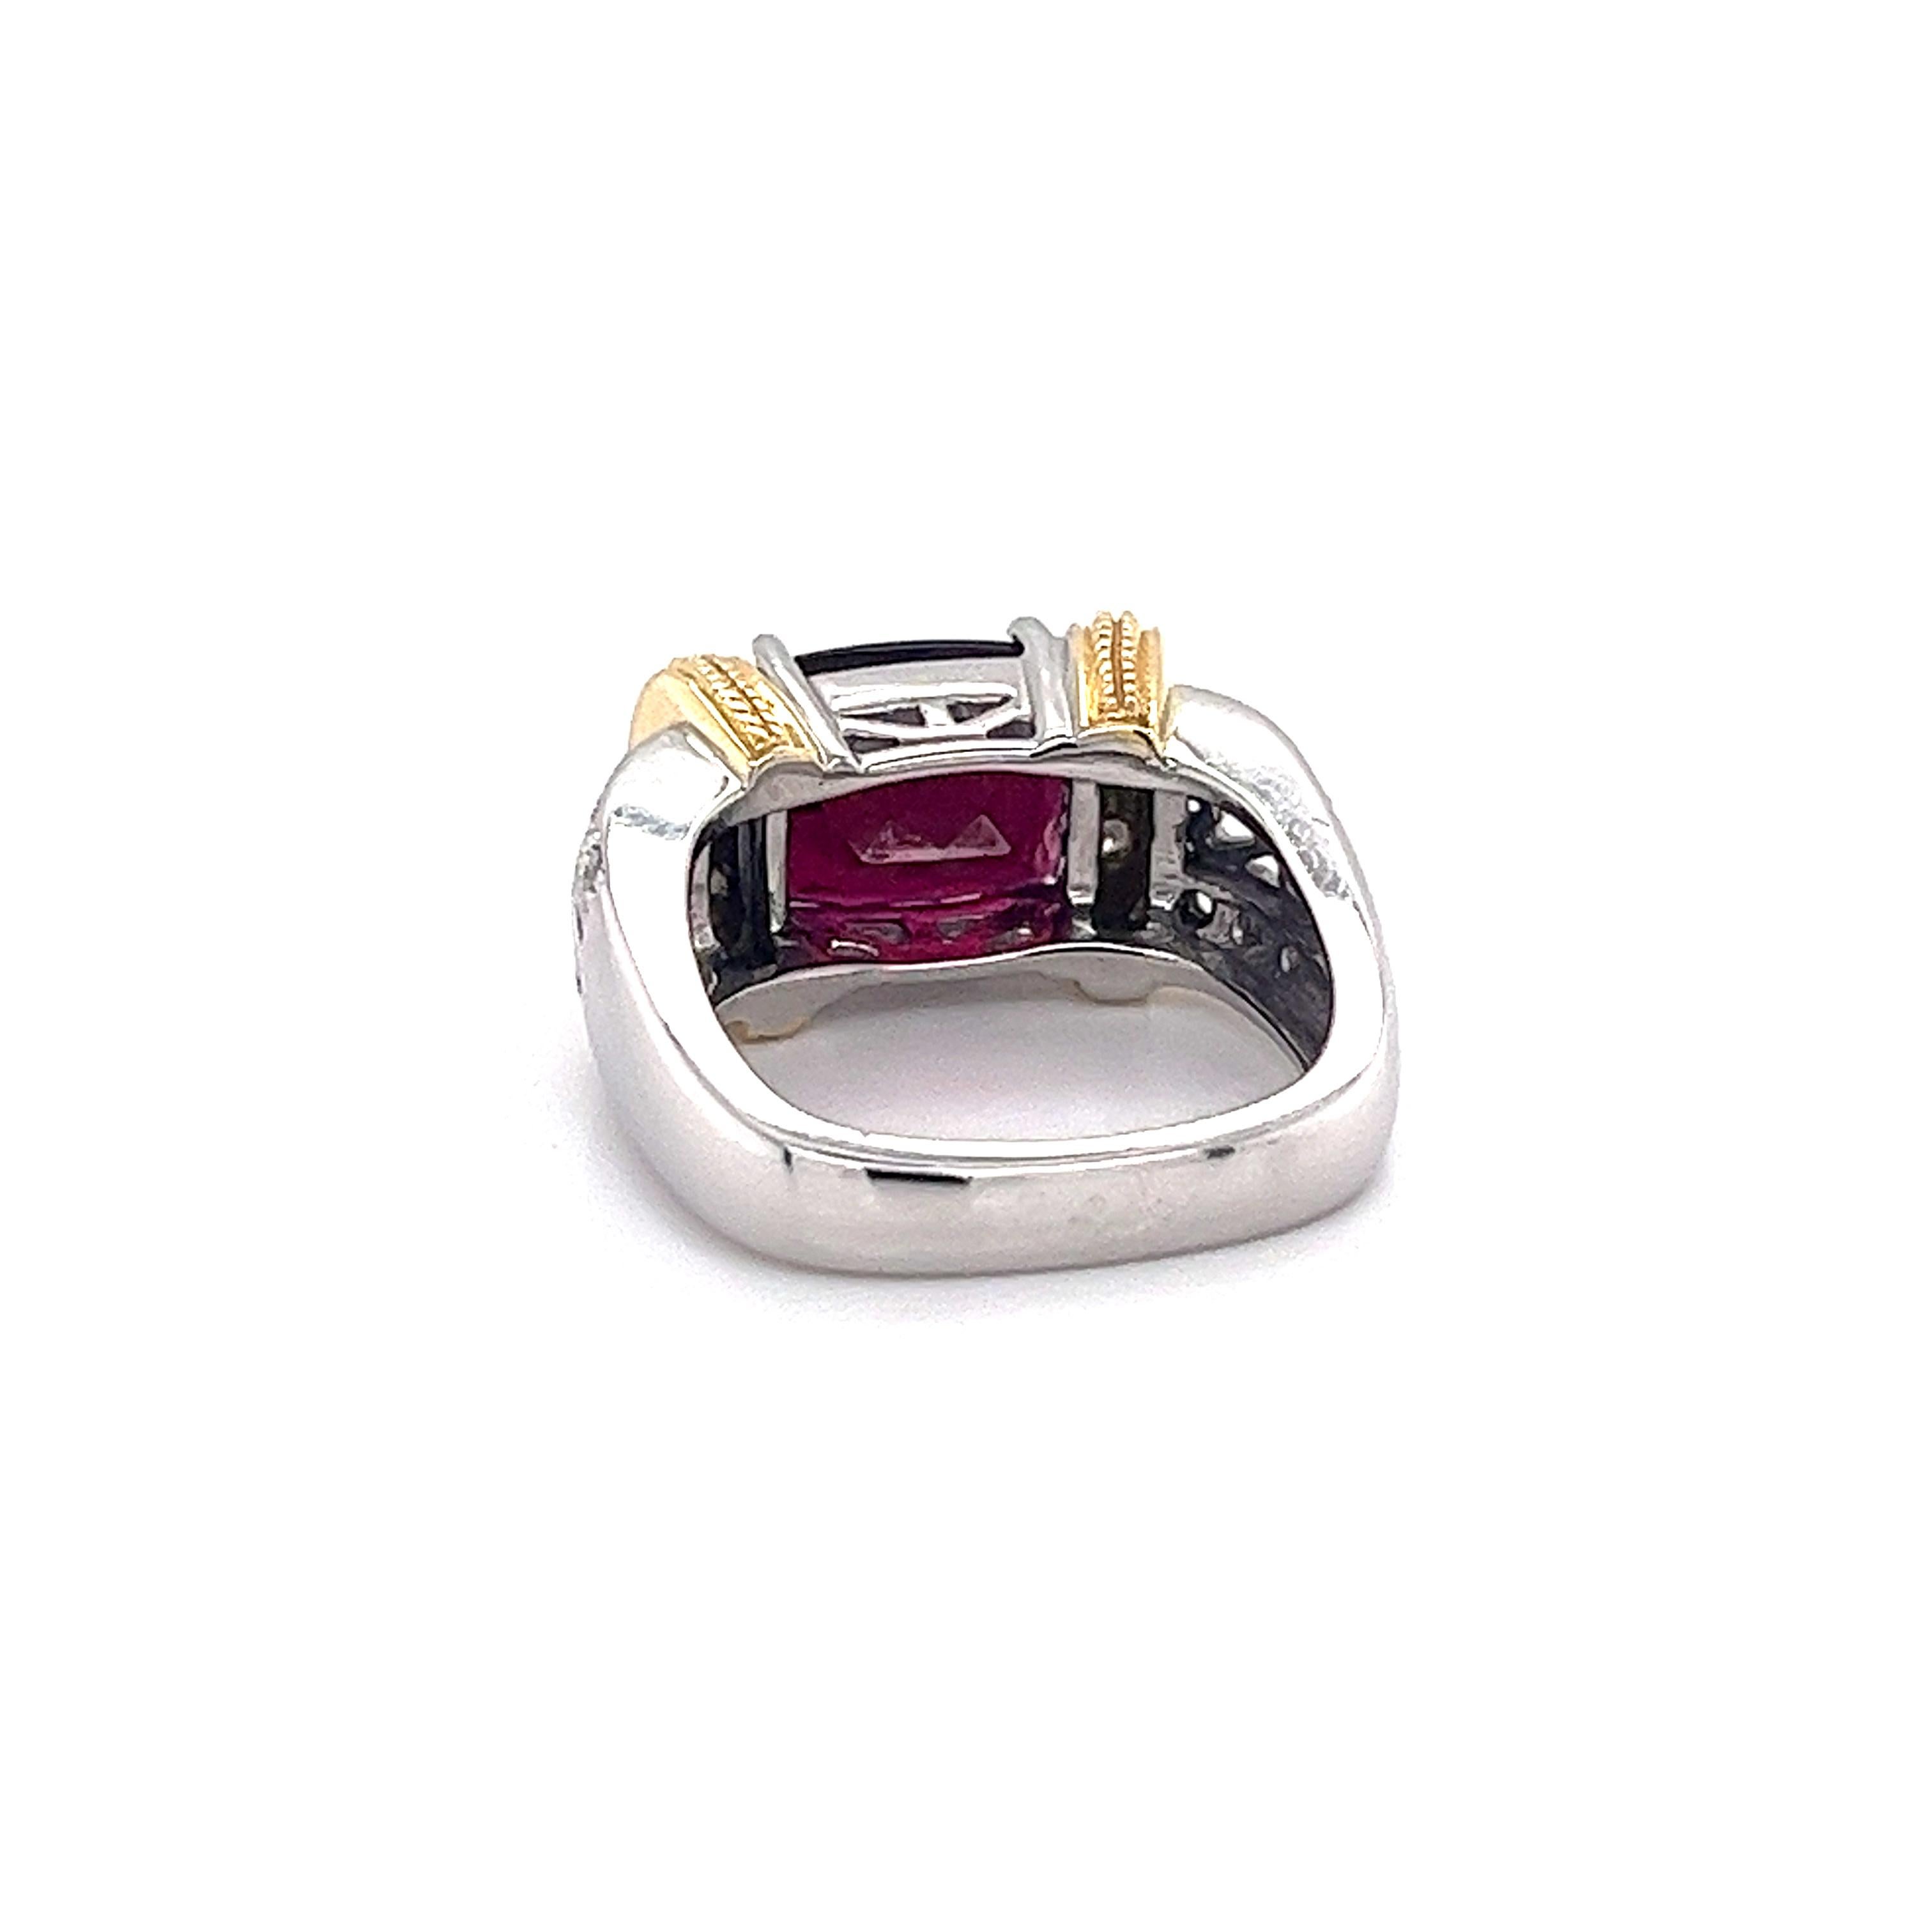 Radiant Cut 5.5 Carat Rubellite Tourmaline with Heart Motif Filigree Set Ring For Sale